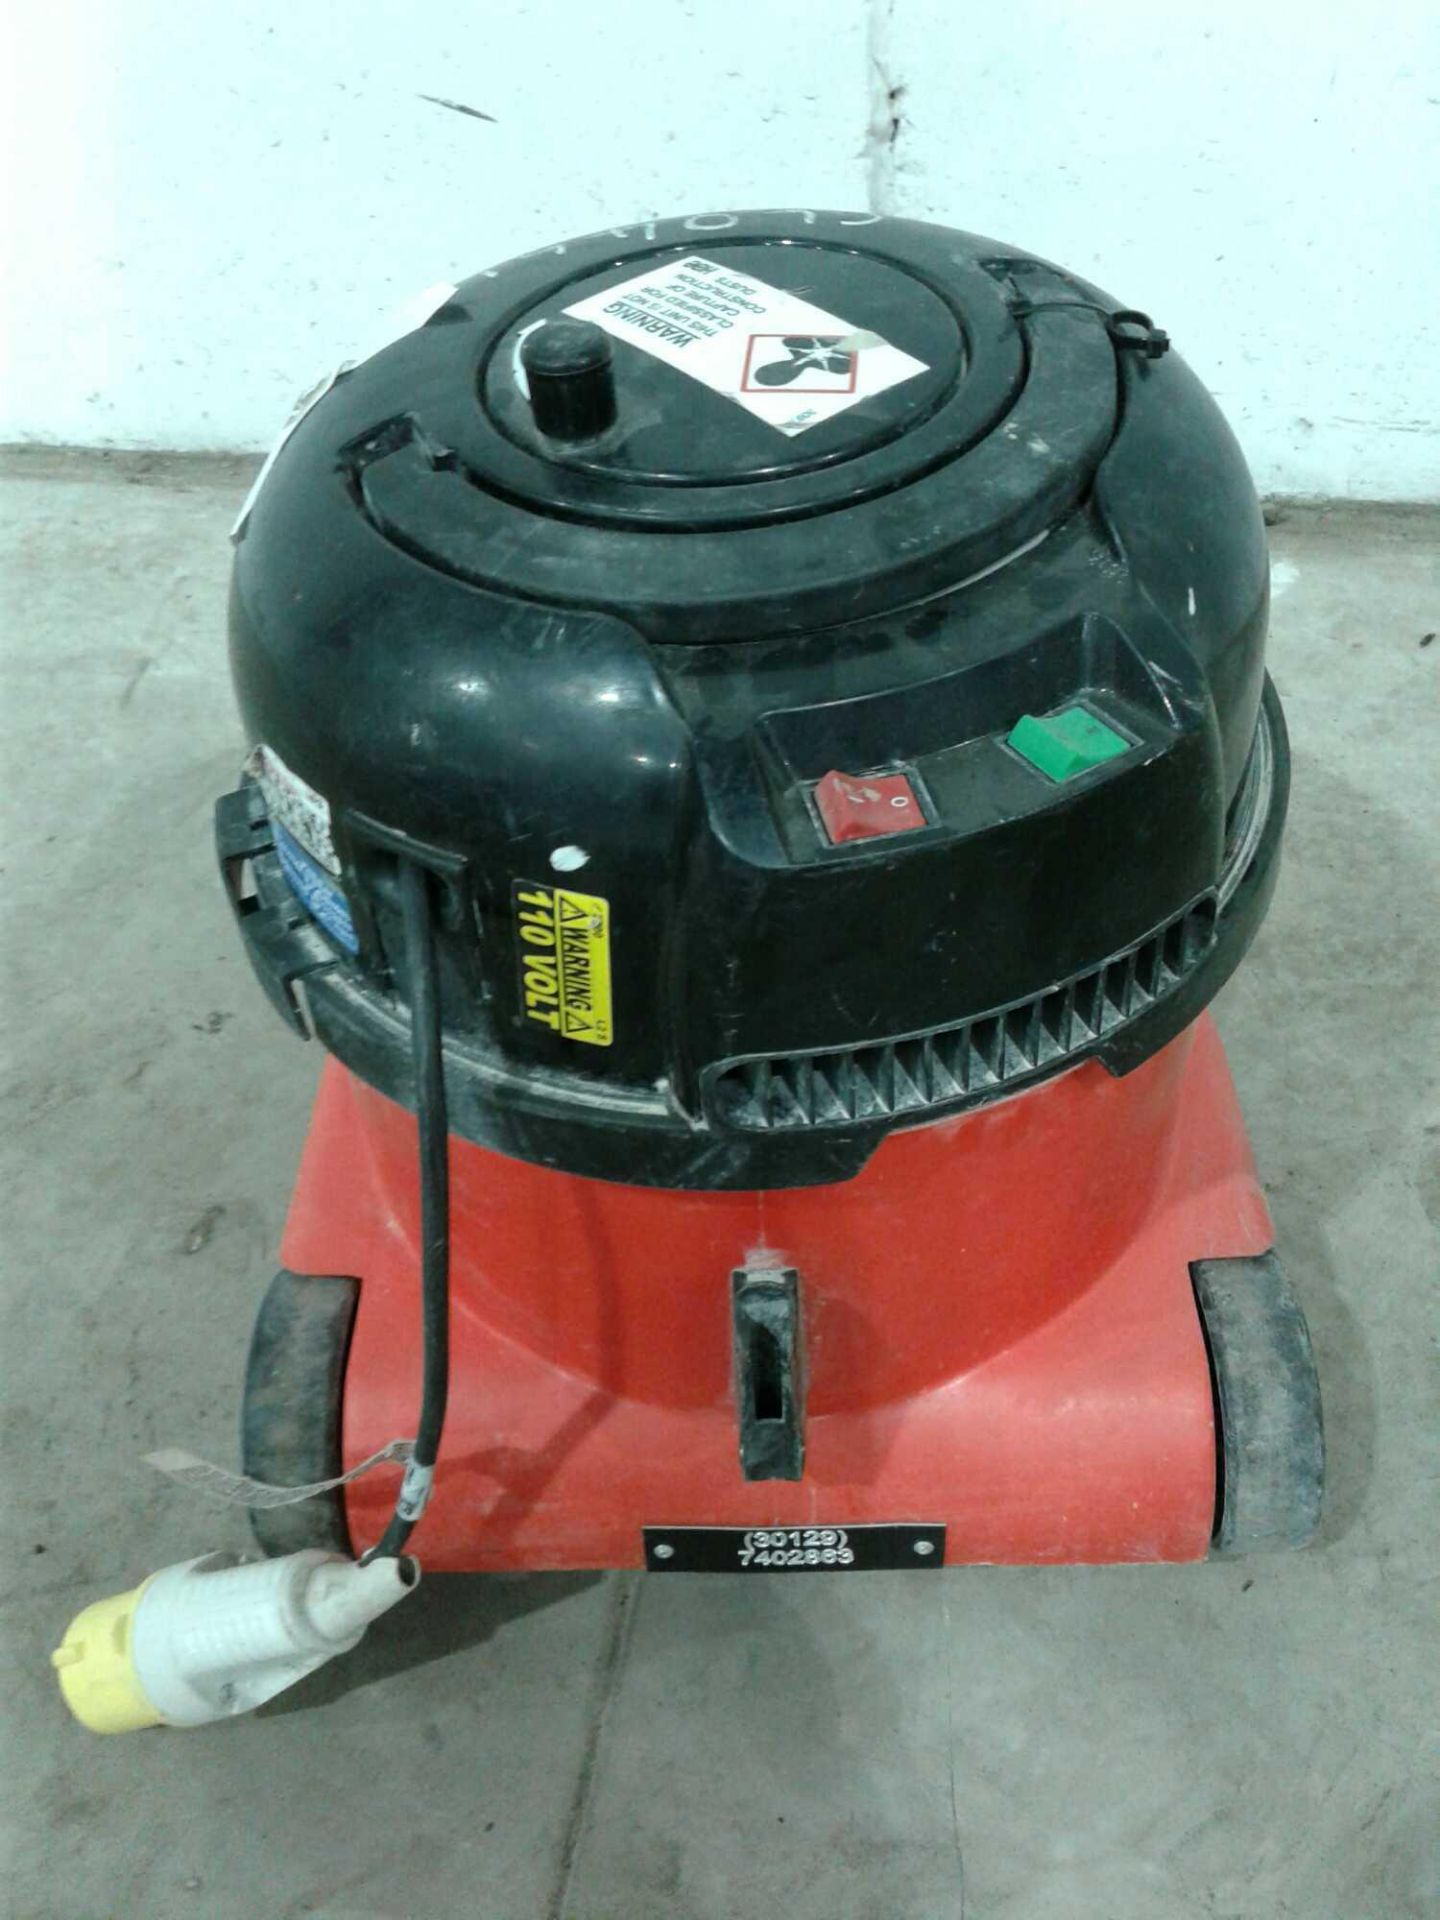 Henry Numatic vacuum cleaner - Image 2 of 2